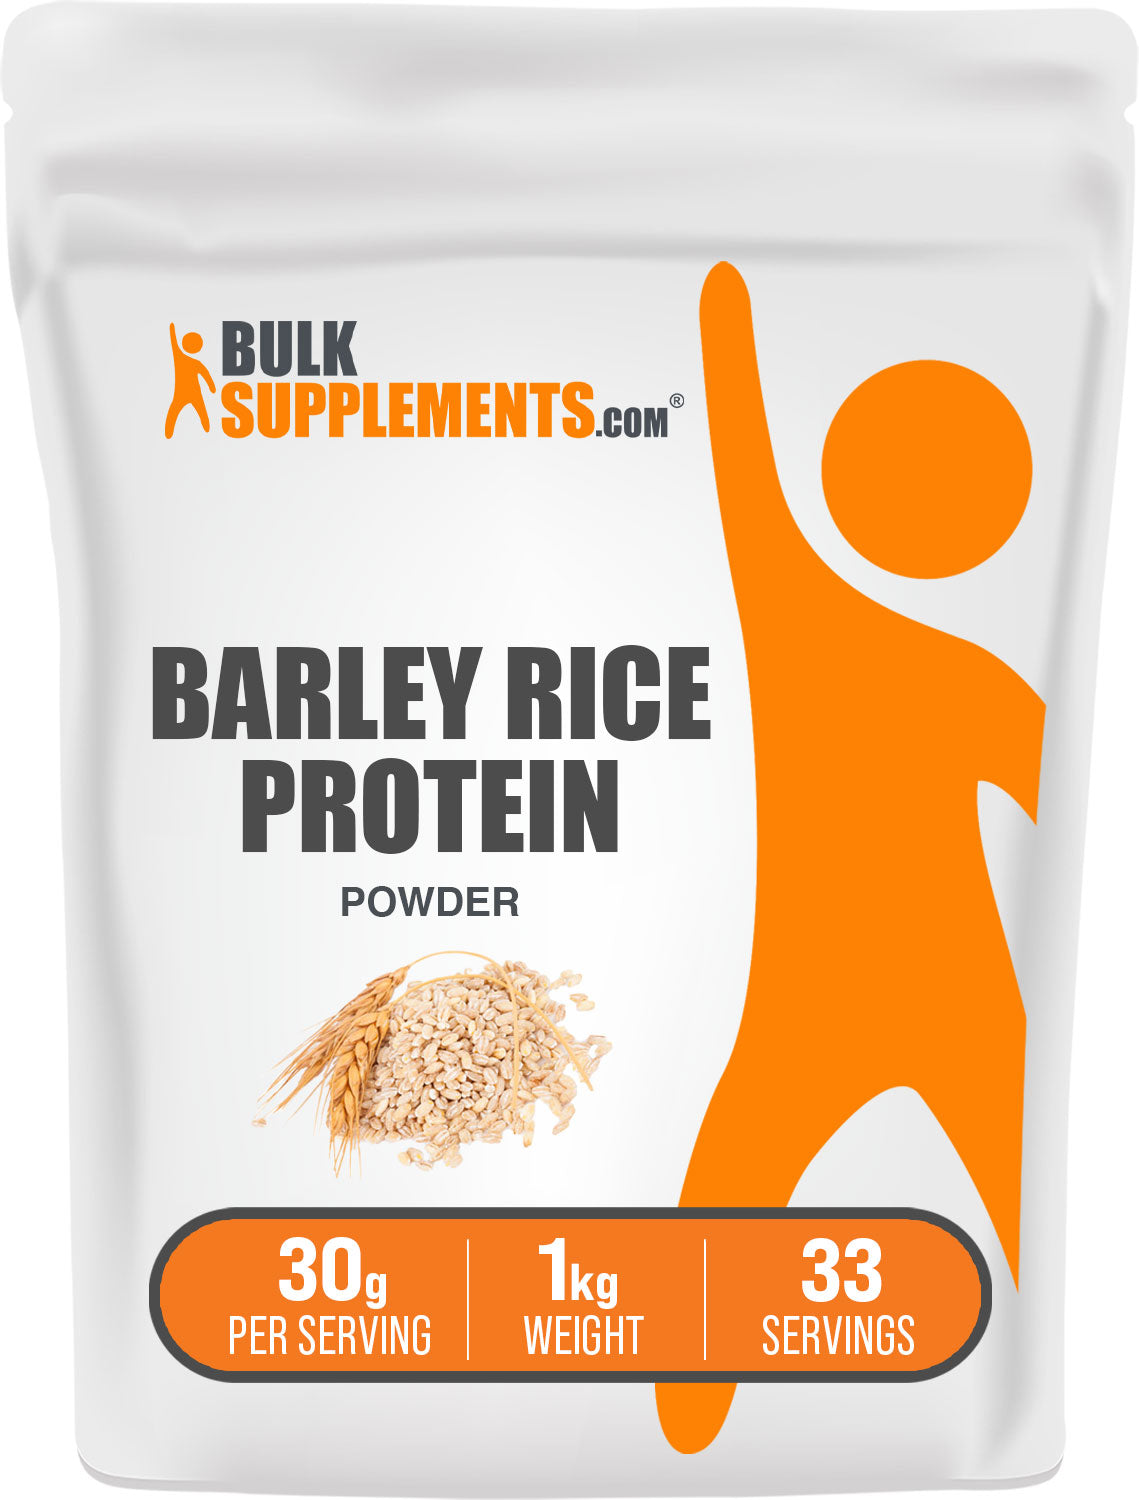 BulkSupplements.com Barley Rice Protein Powder 1kg Bag